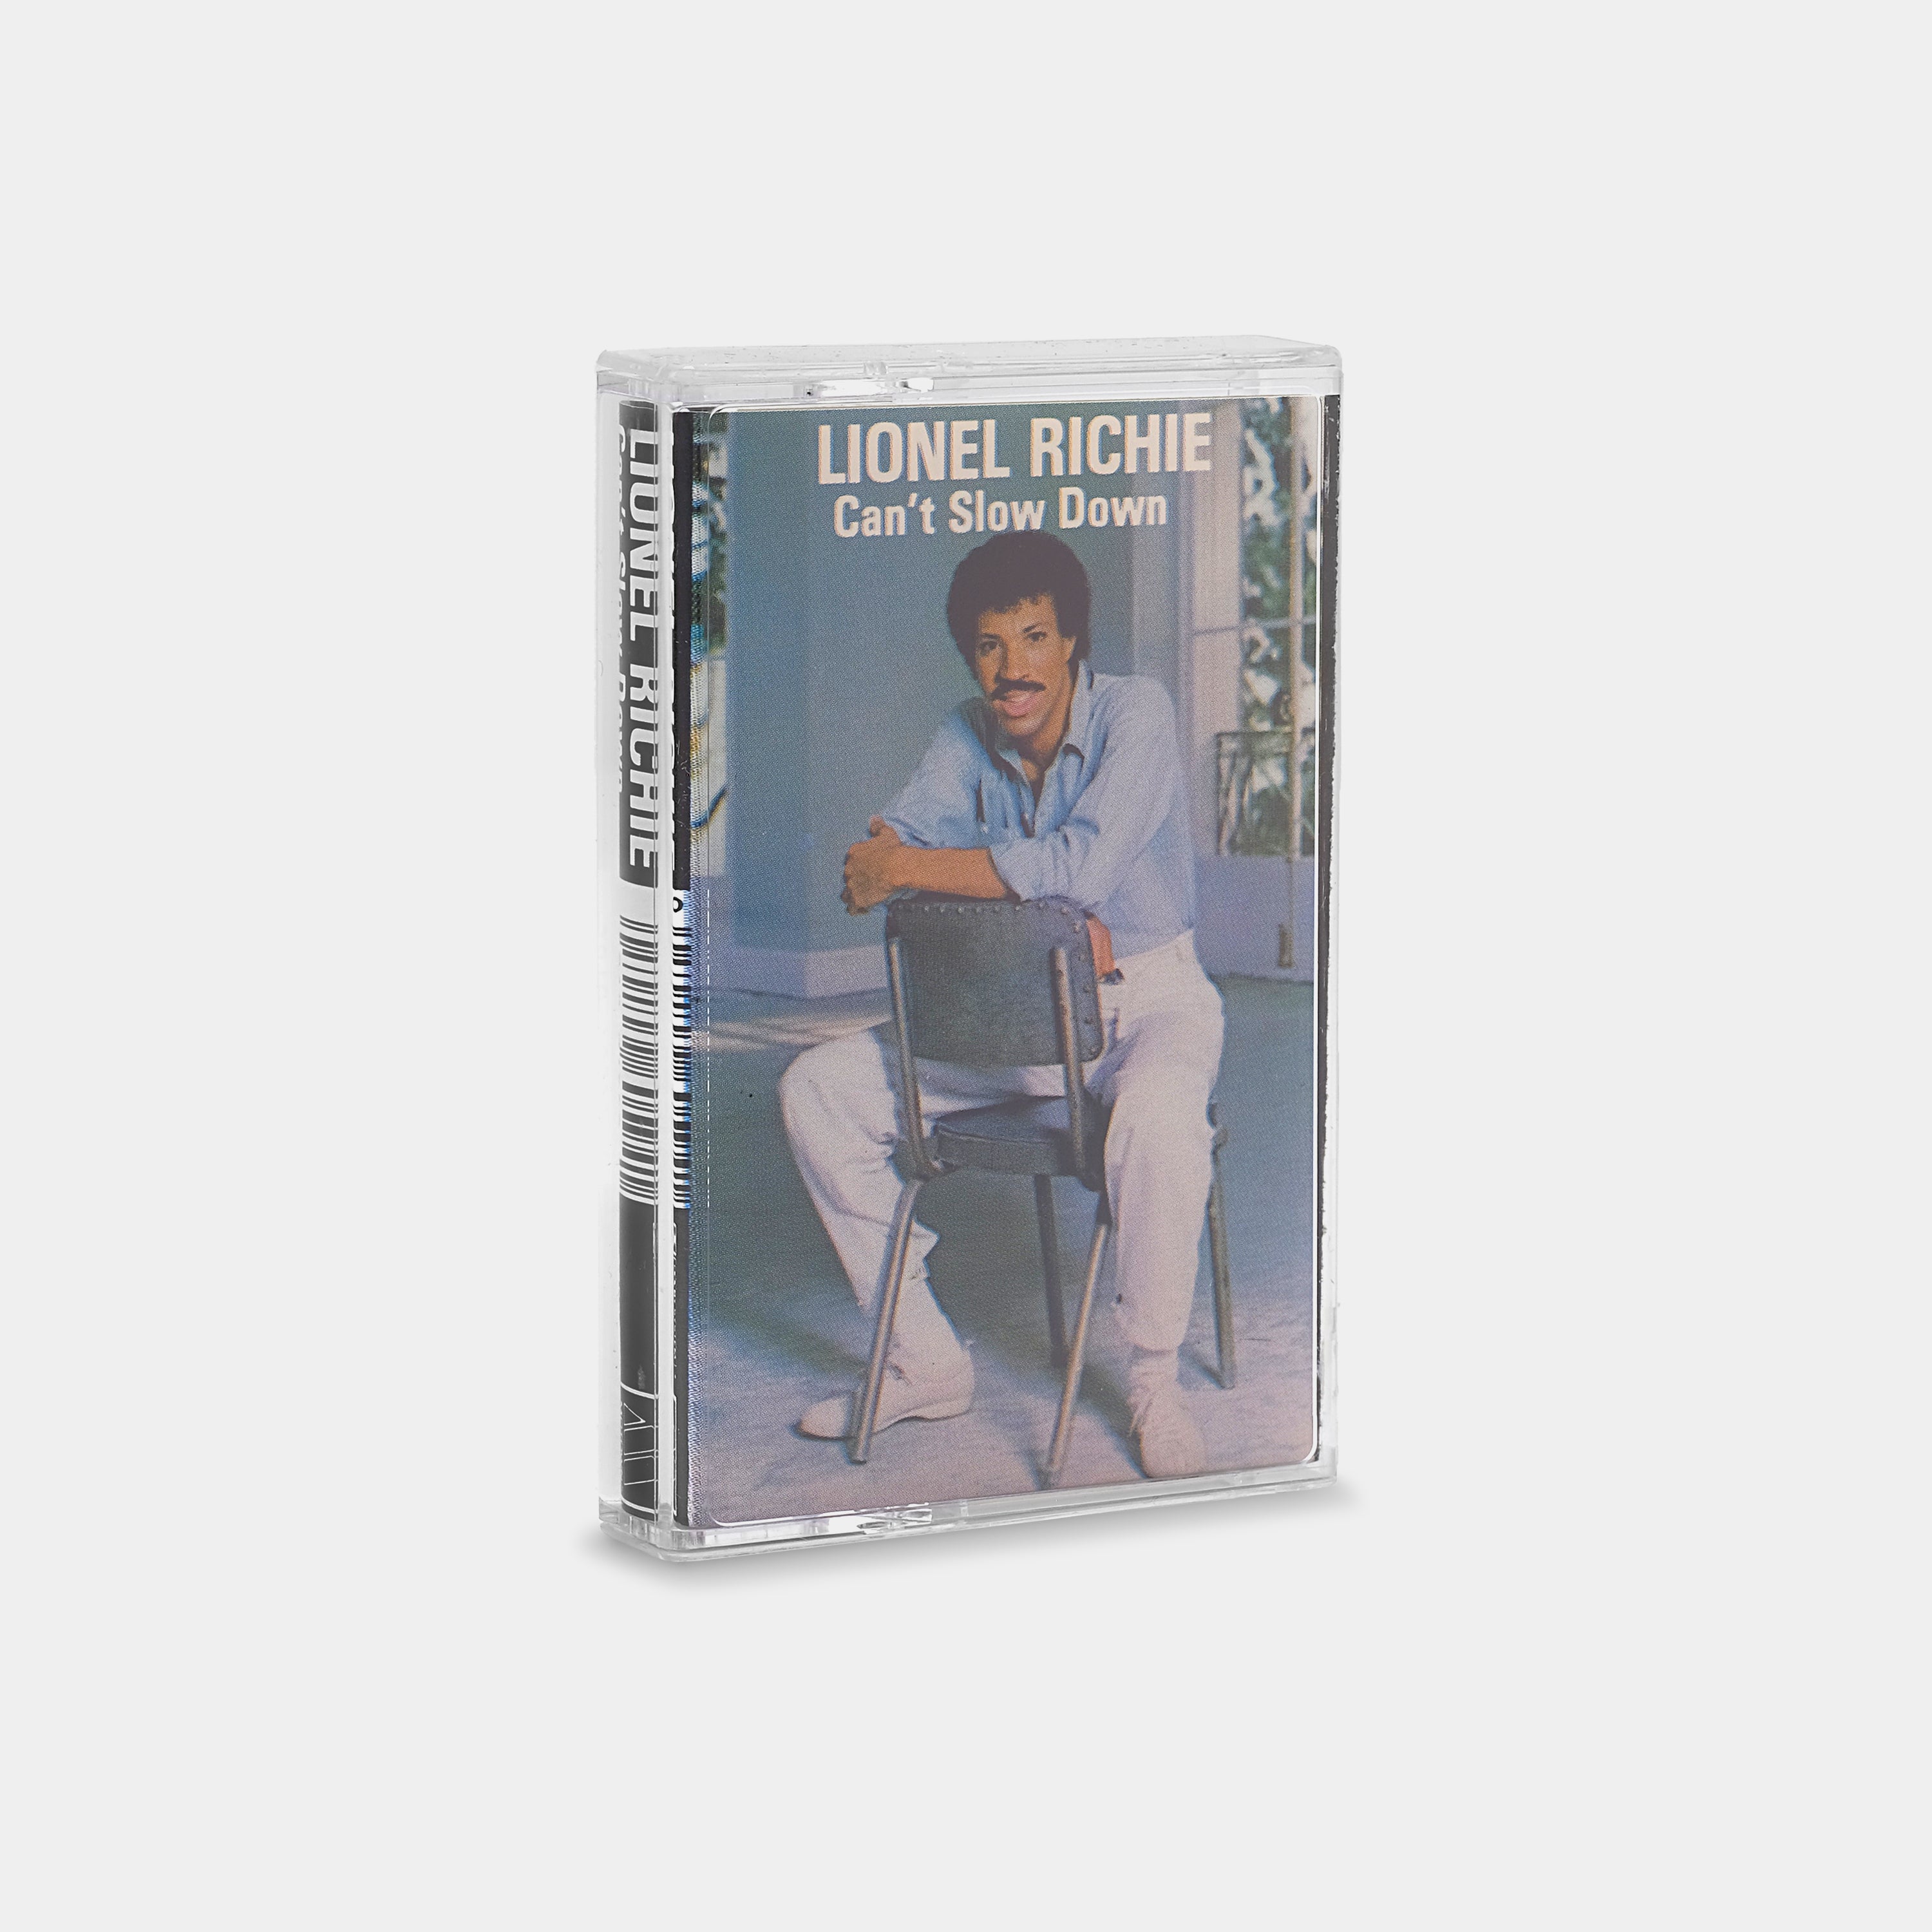 Lionel Richie - Can't Slow Down Cassette Tape